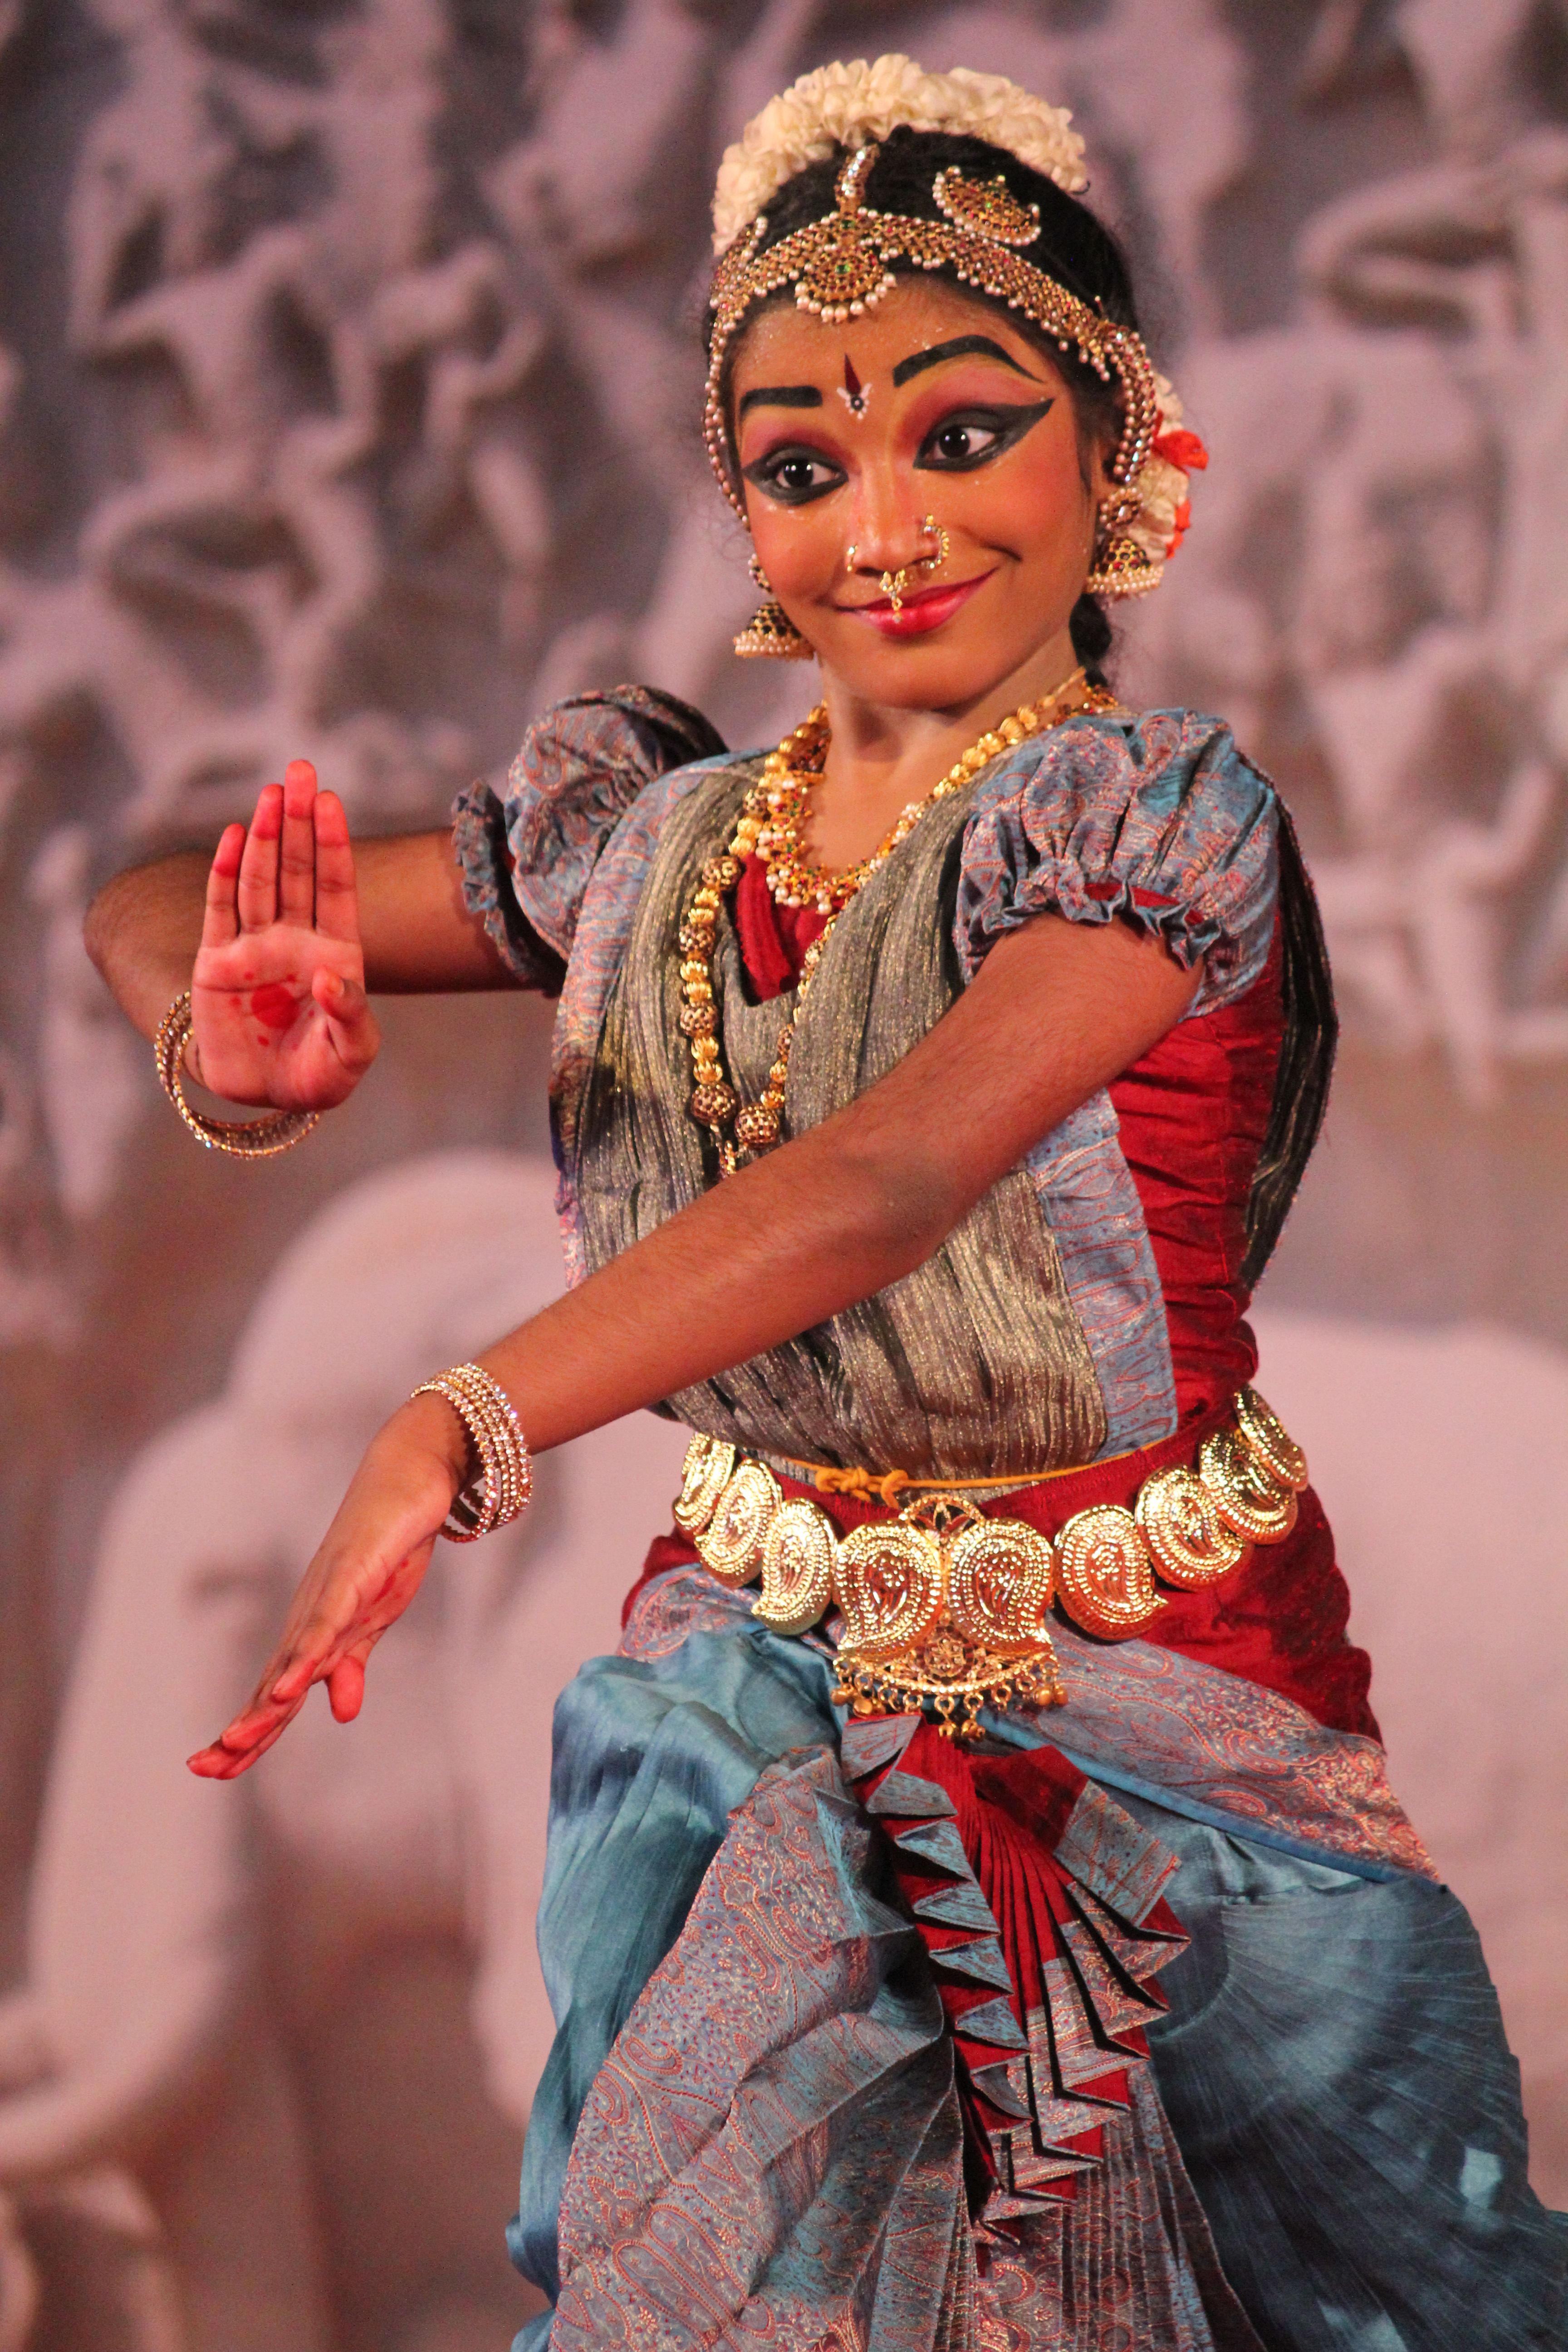 File:Mamallapuram, Indian Dance Festival, Bharatanatyam dancer  (9902770145).jpg - Wikimedia Commons